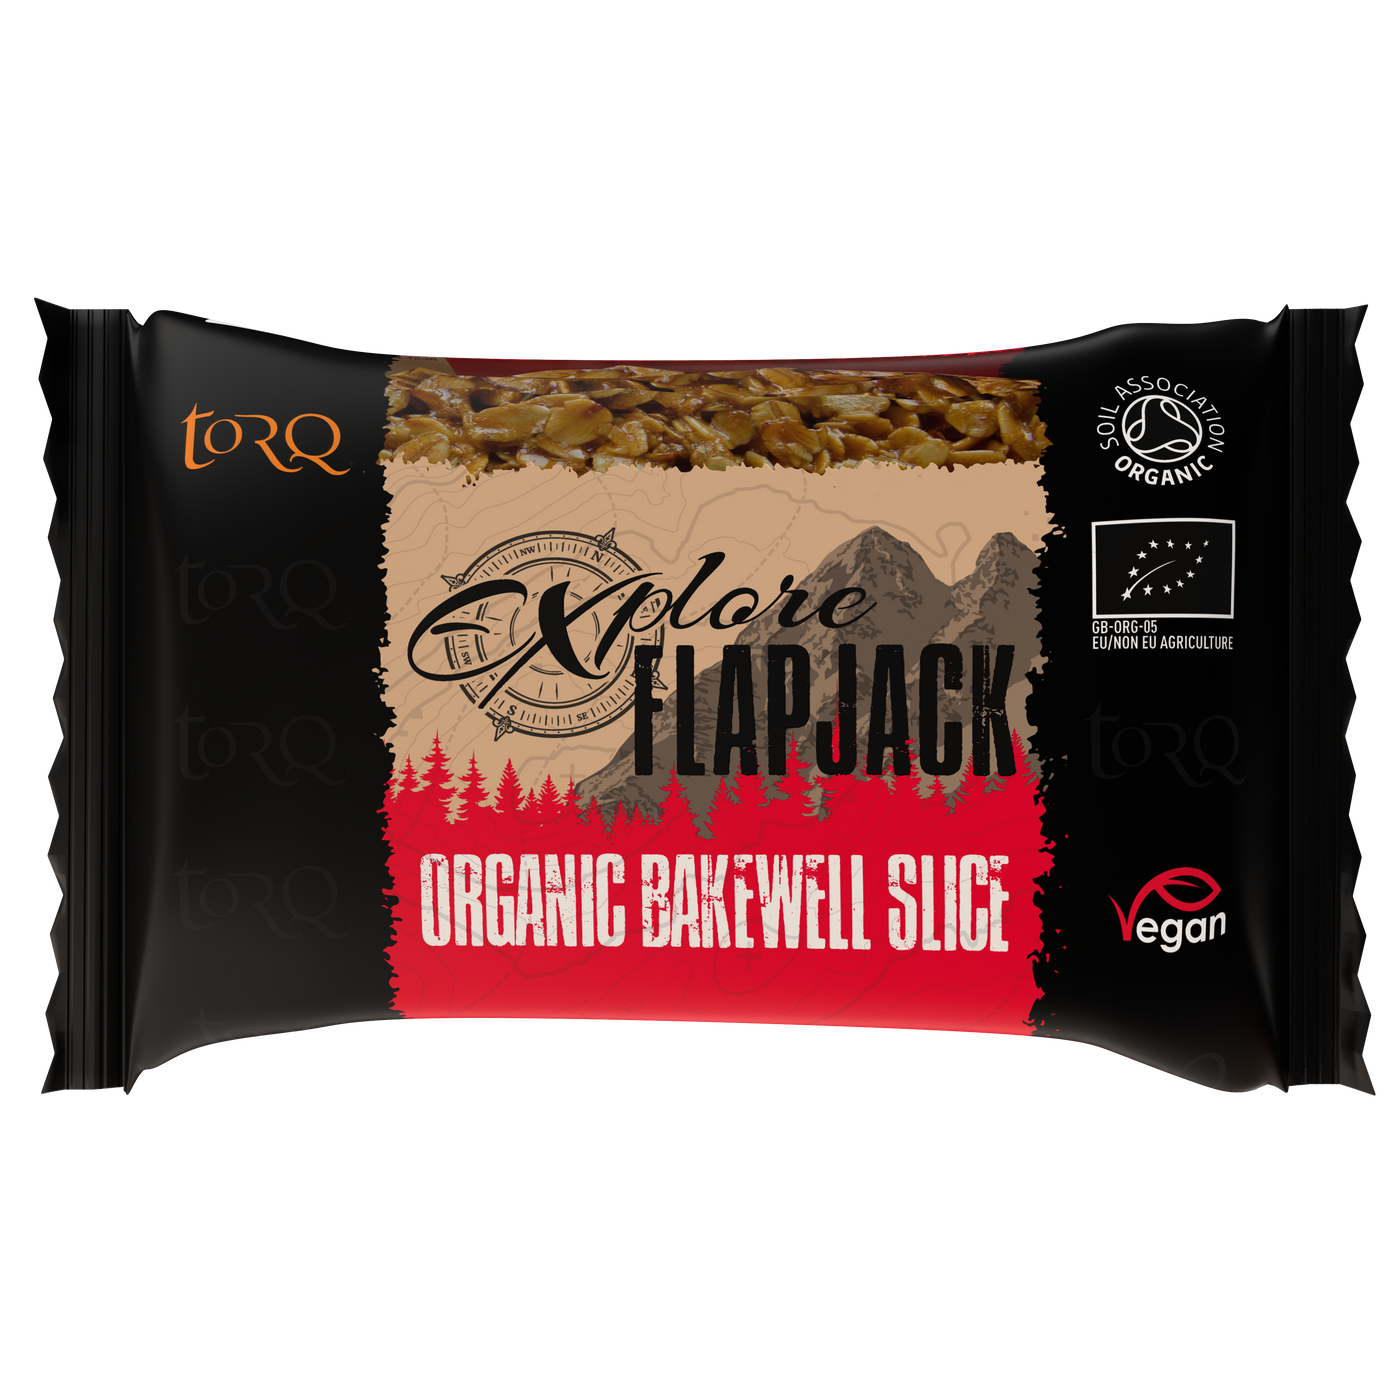 Torq Explore Flapjack - Organic Bakewell Slice